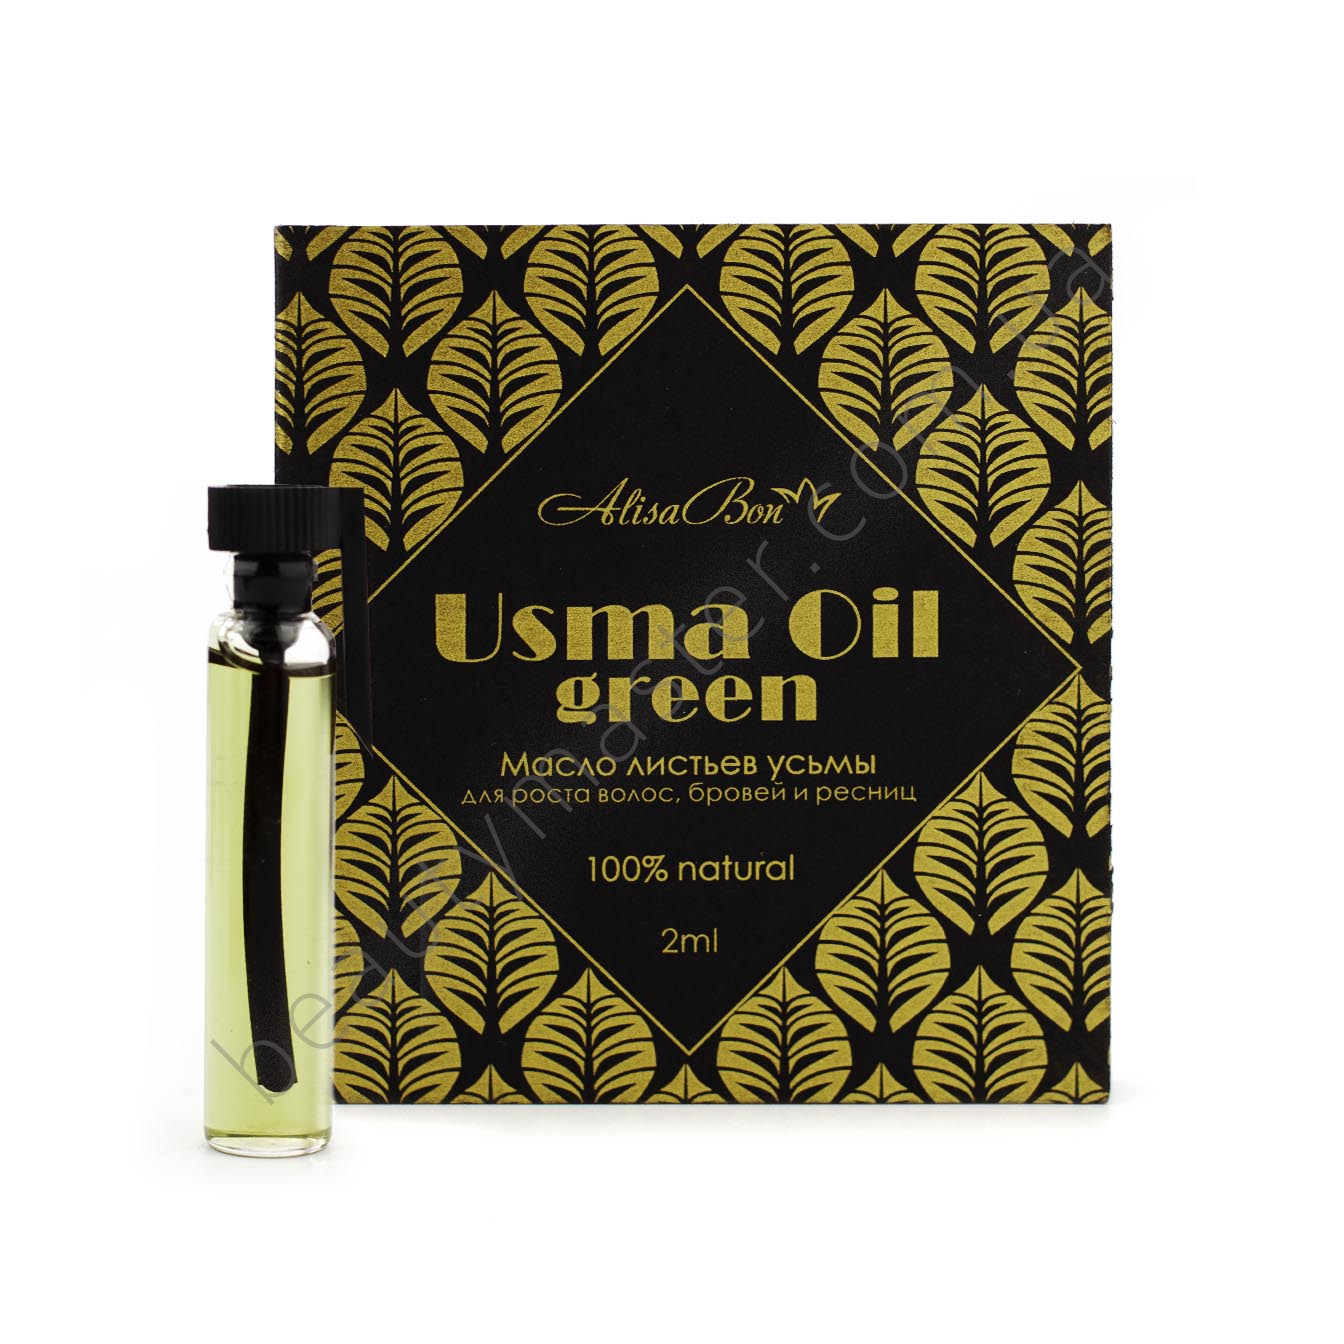 USMA OIL Масло листьев усьмы «Usma Oil green» 2 мл Alisa Bon